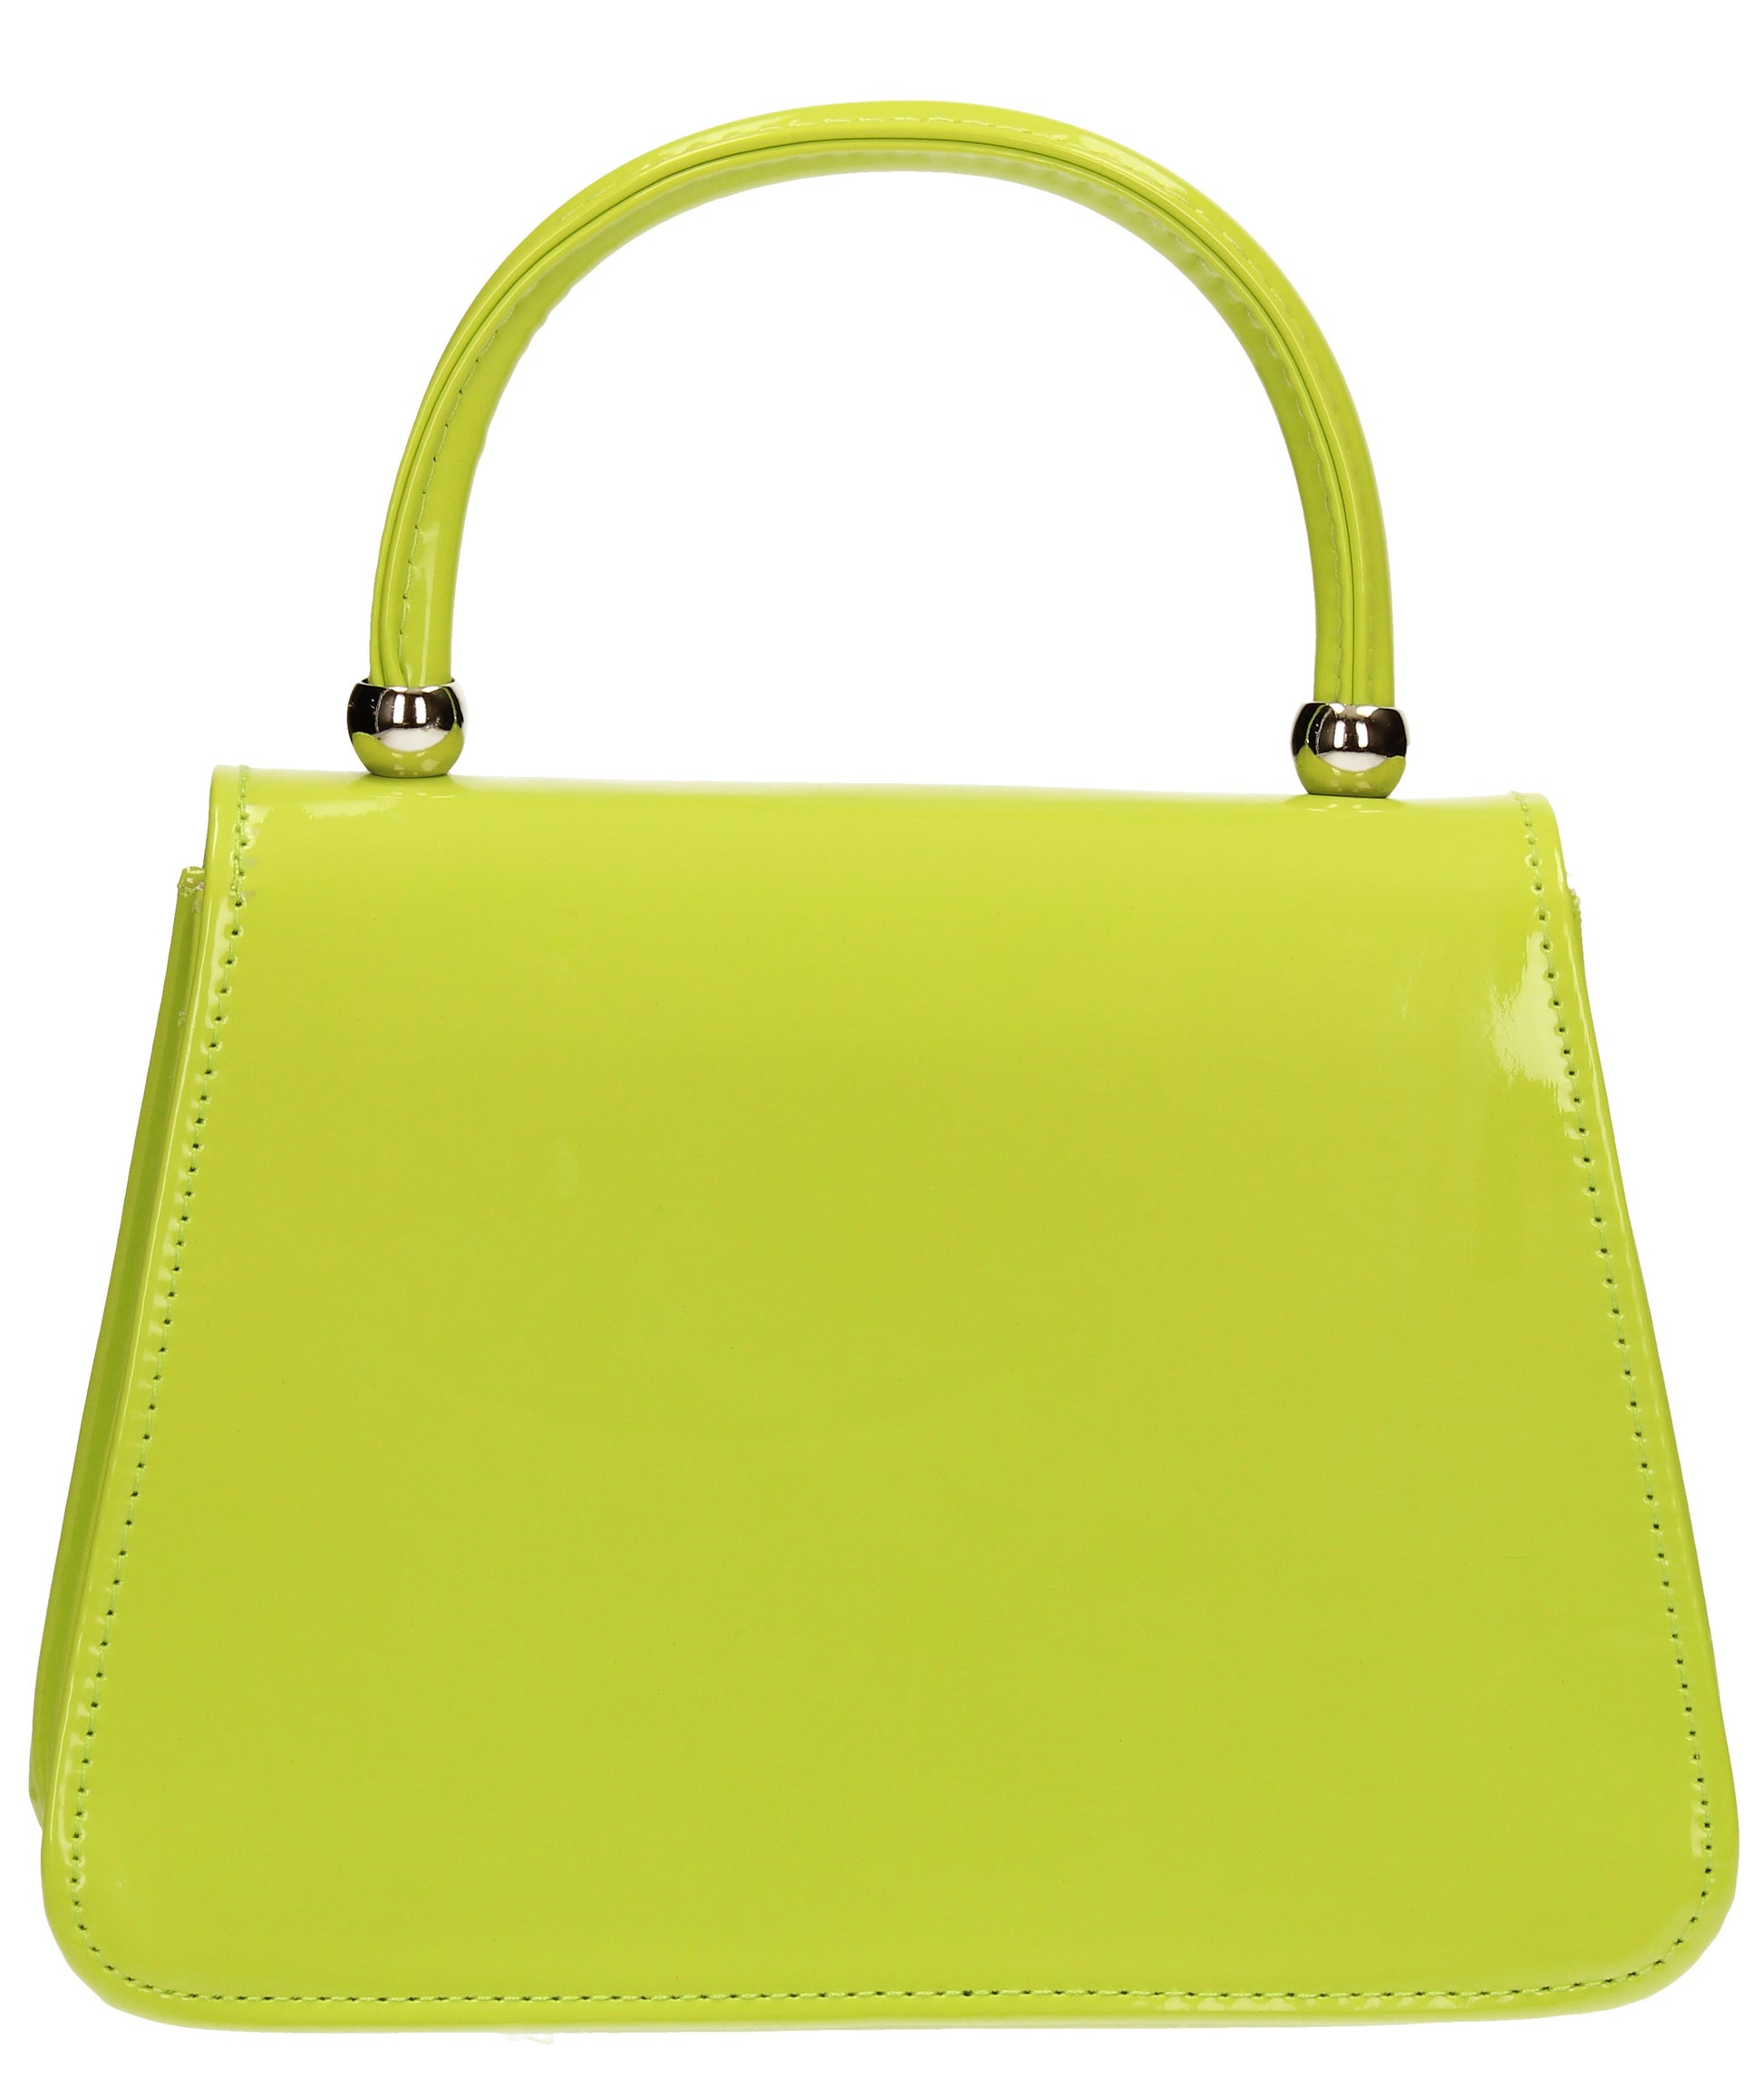 SWANKYSWANS Hayley Clutch Bag Green Cute Cheap Clutch Bag For Weddings School and Work